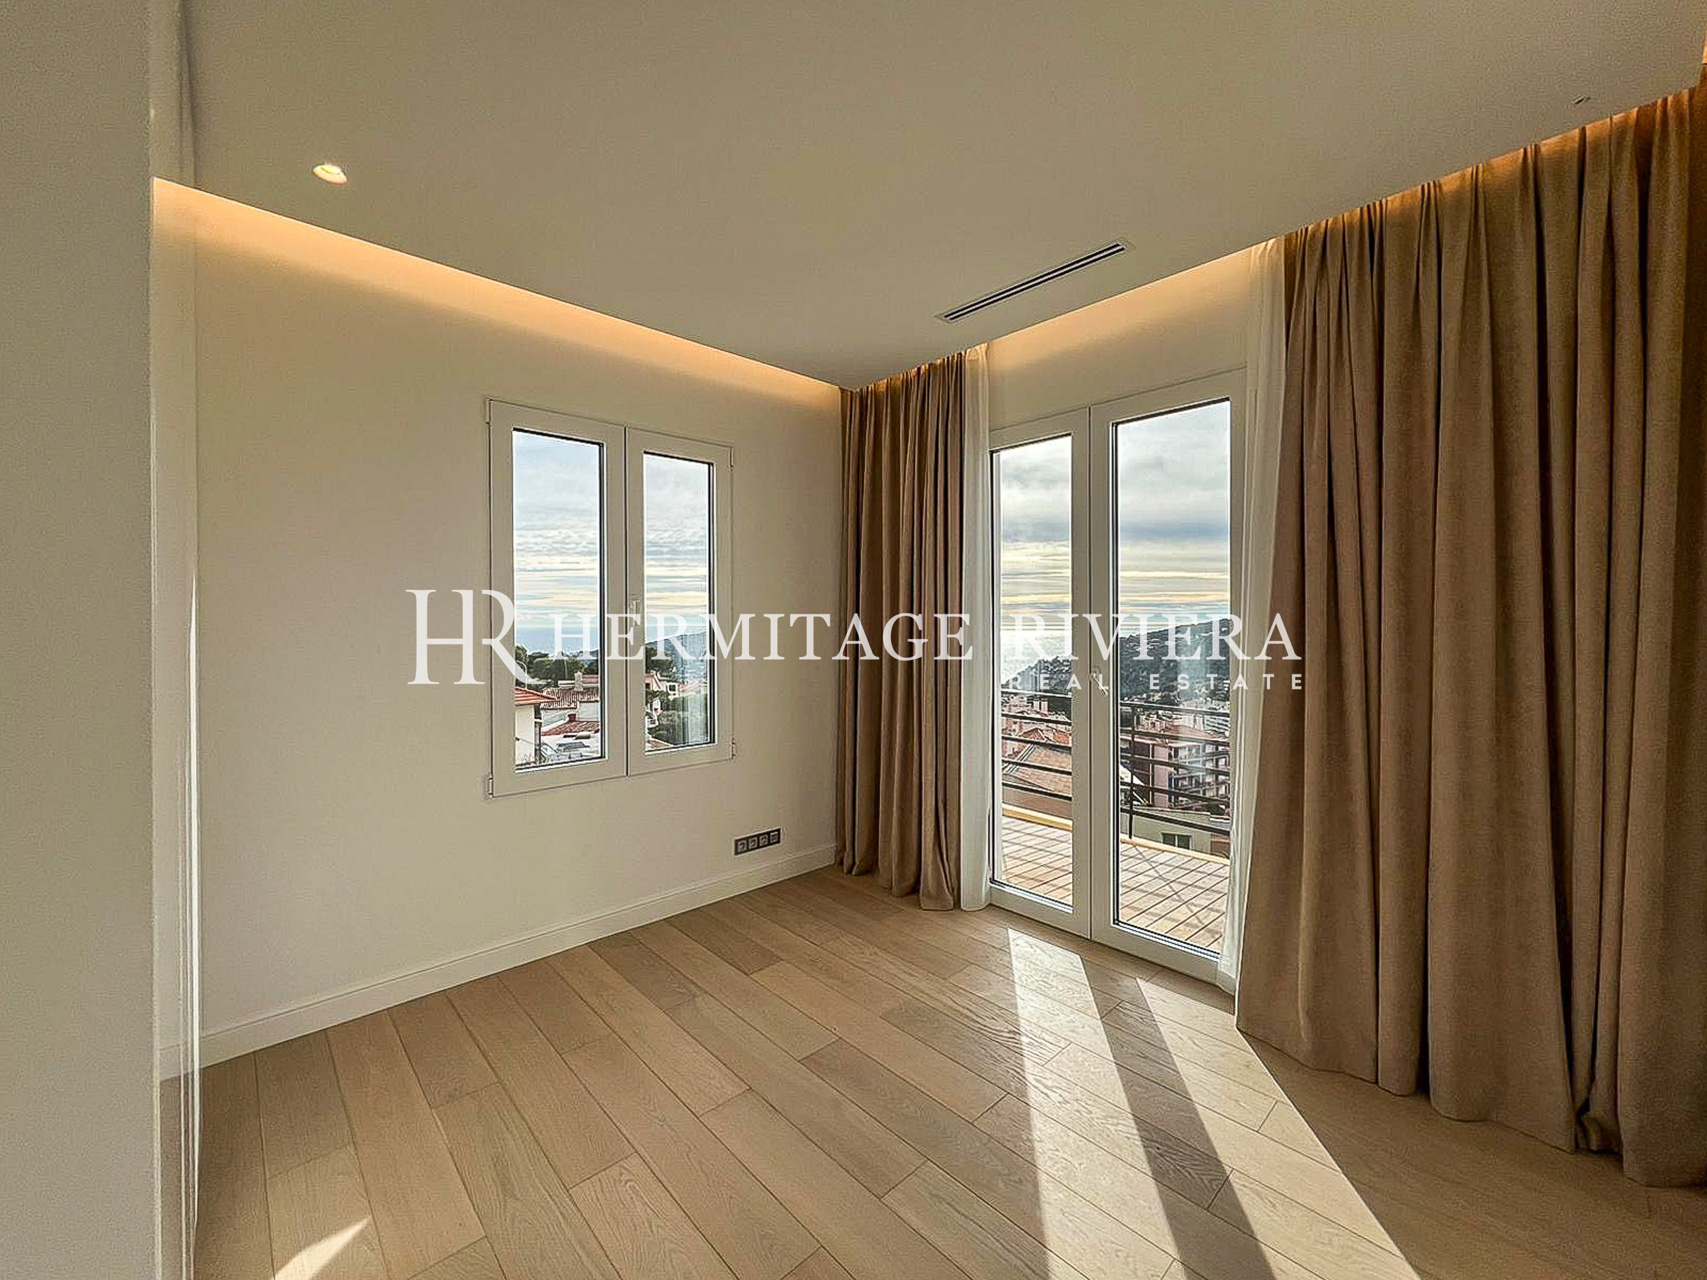 Splendid renovated apartment with panoramic sea view (image 12)